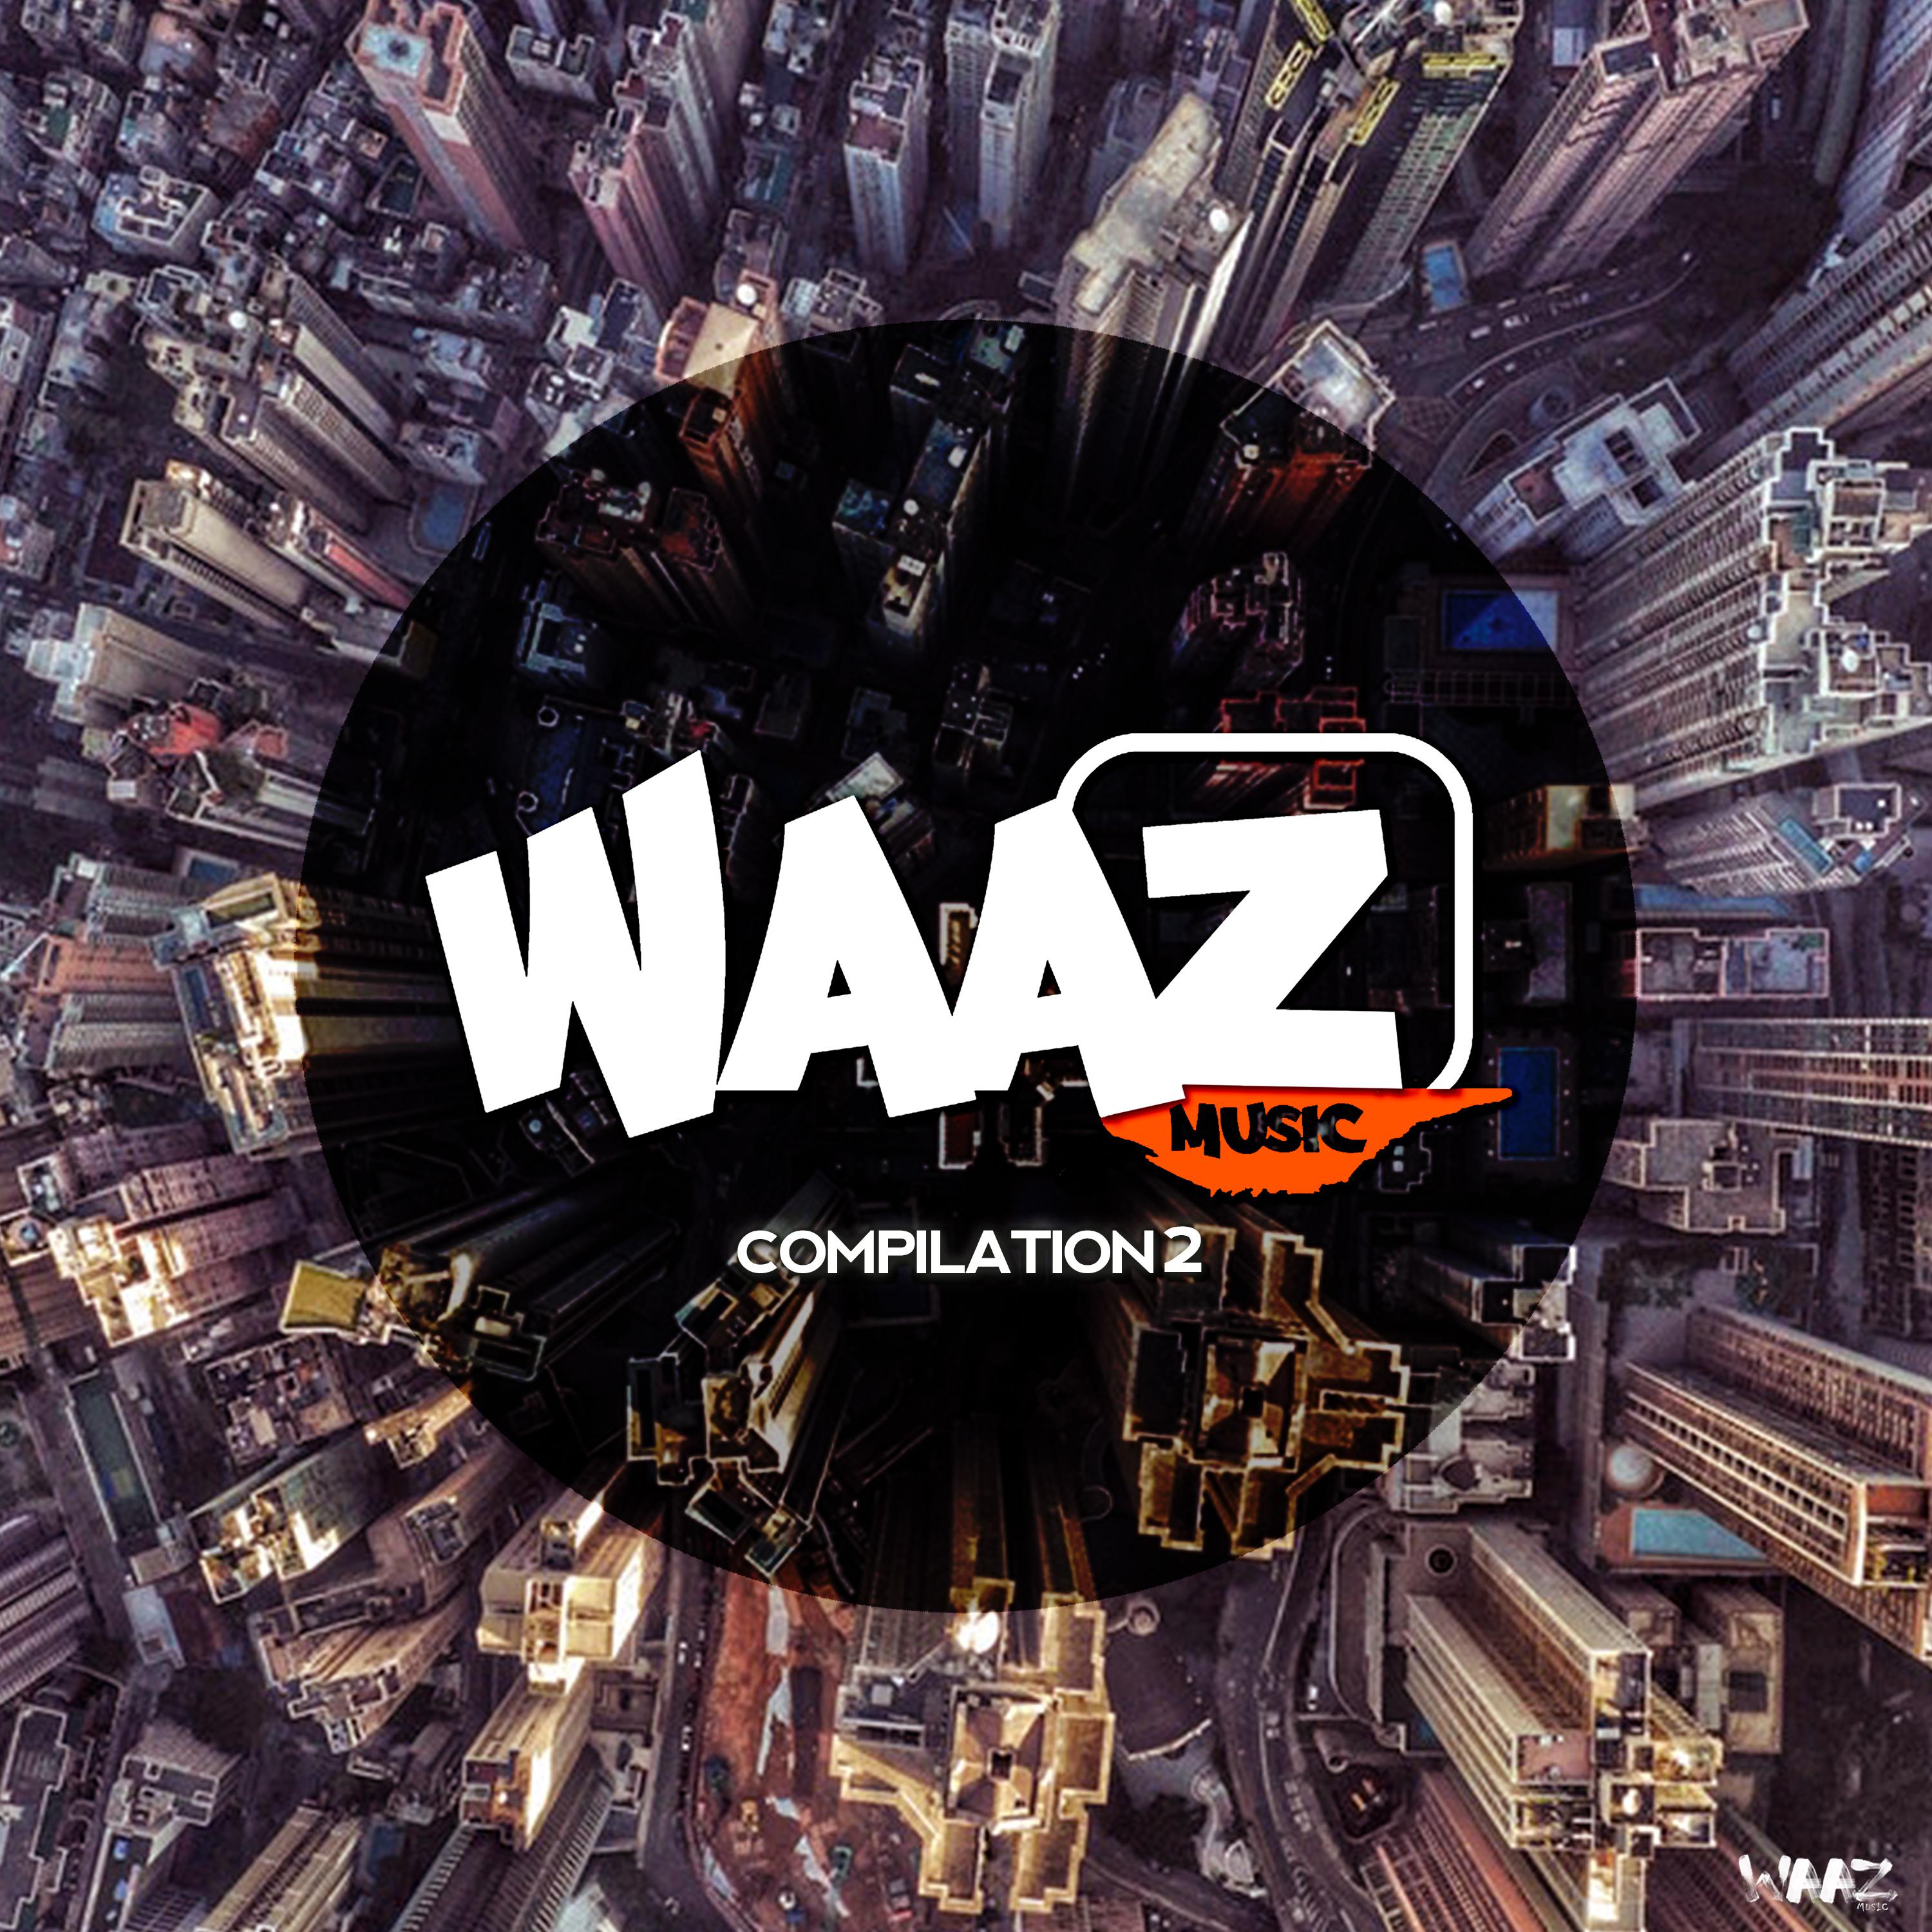 The Best of Waaz Music 2